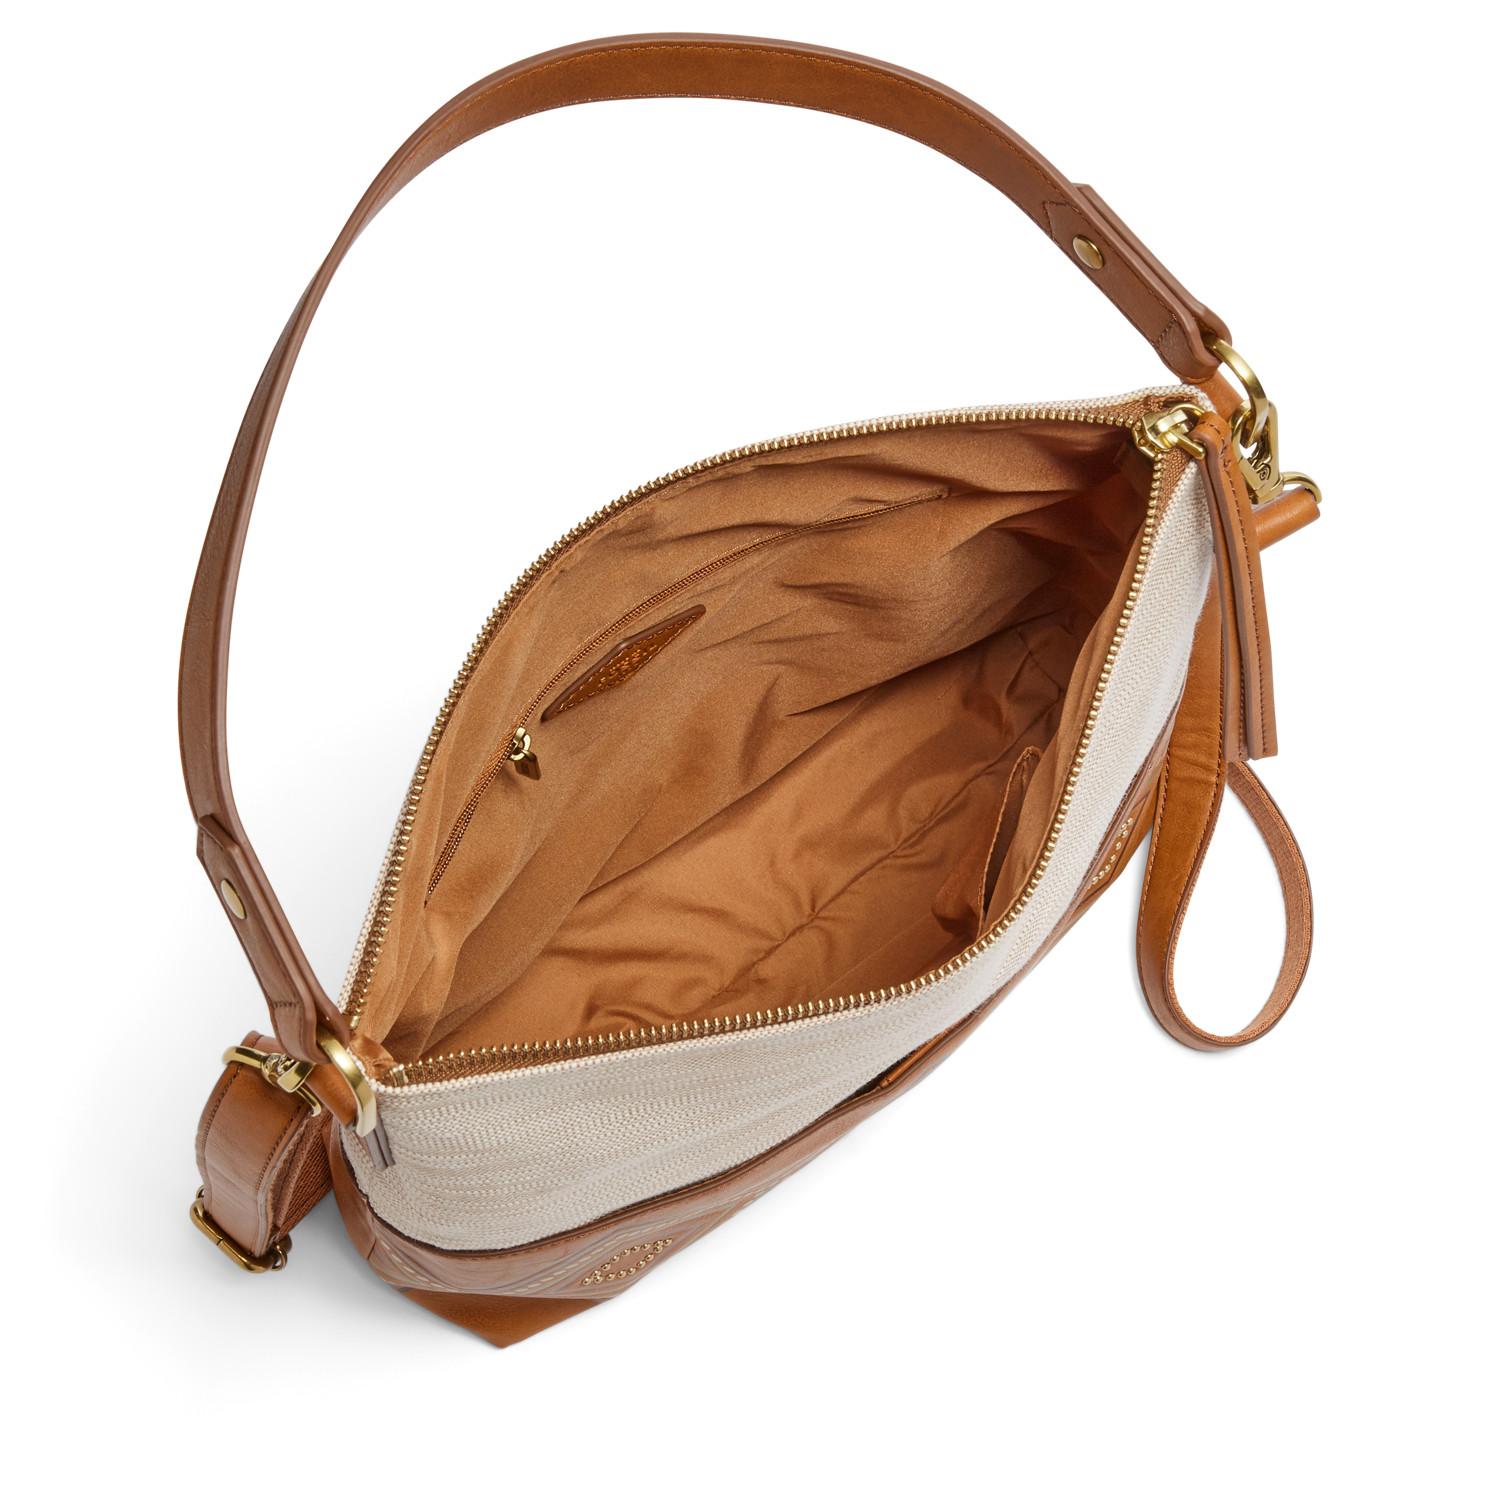 Lyst - Fossil Amelia Hobo Handbags Linen in Brown